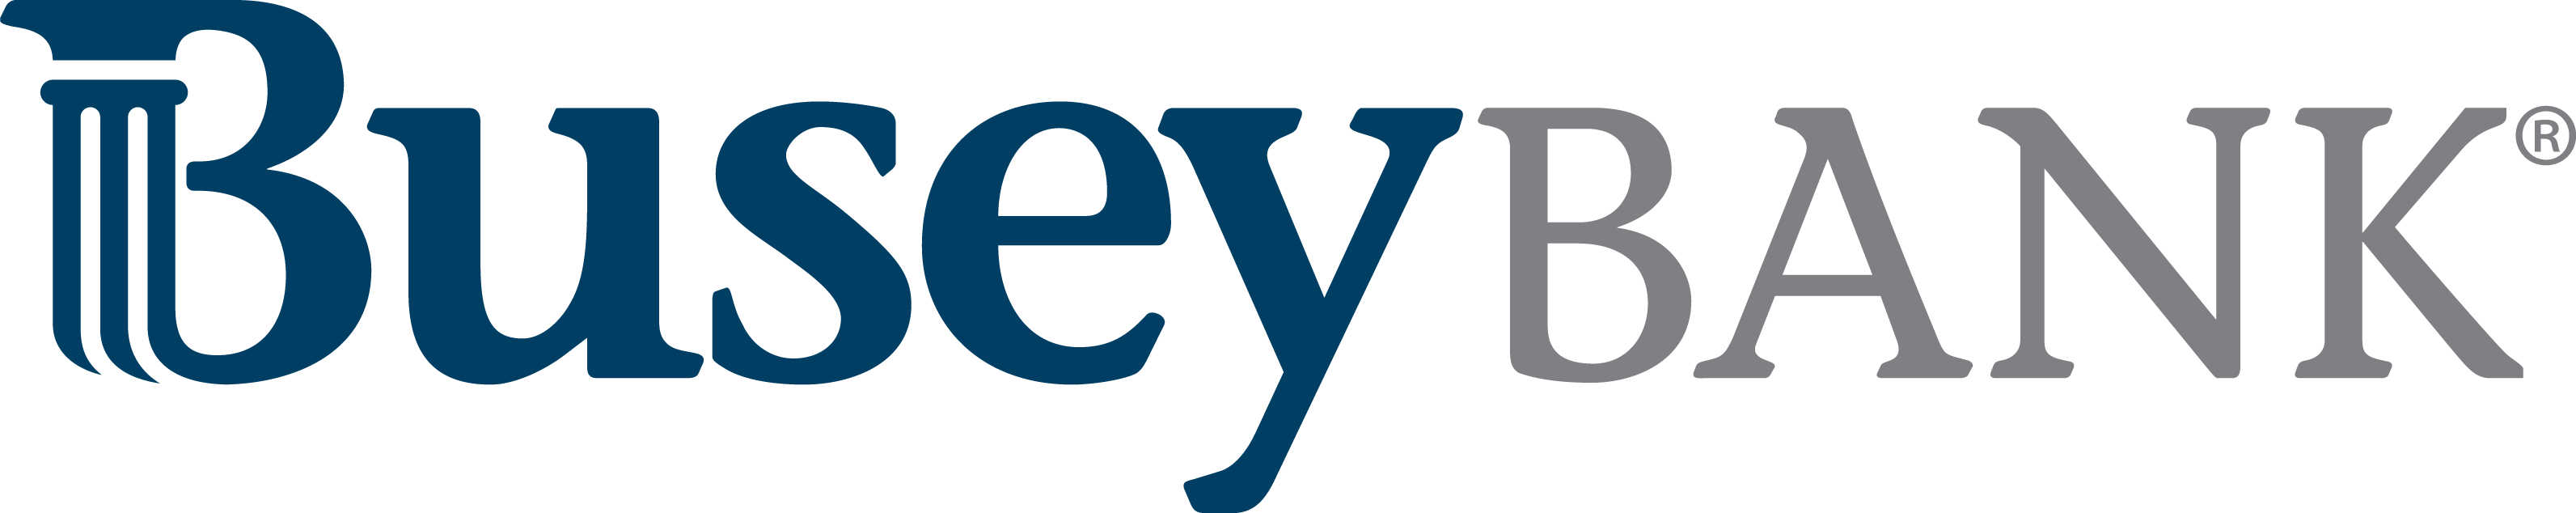 busey_logo-2021-png.png